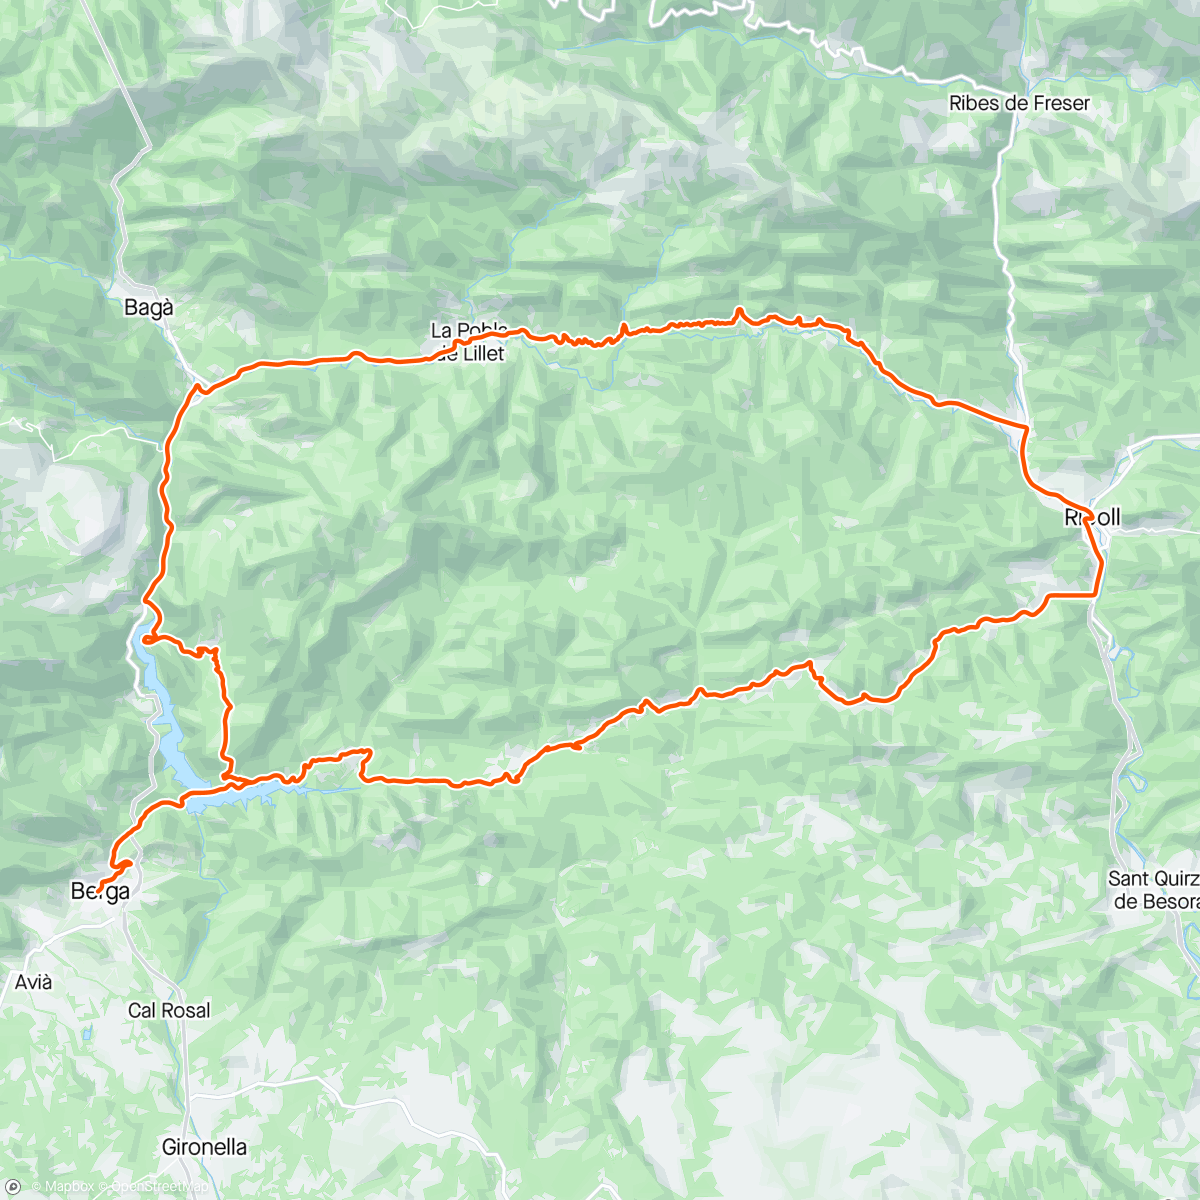 Map of the activity, Volta Ripoll al pou